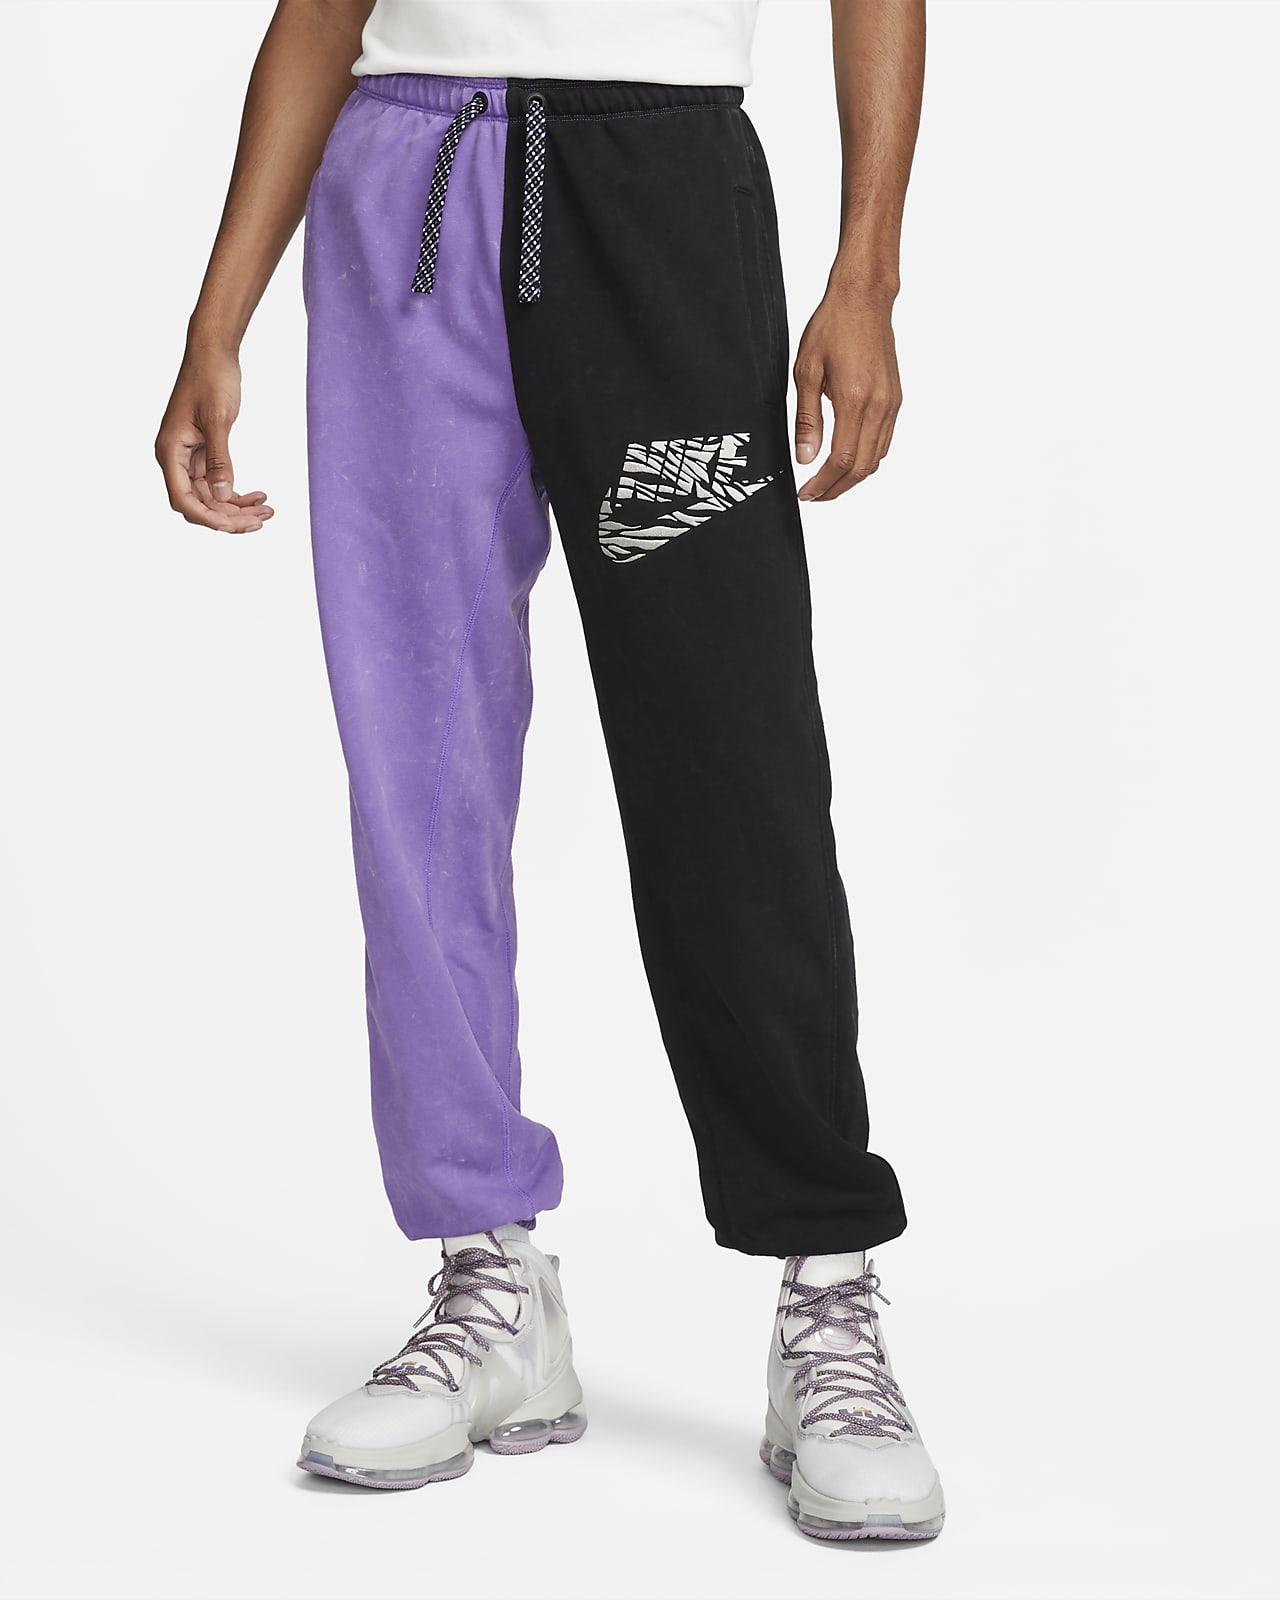 Nike Dri-FIT Standard Issue Men's Premium Basketball Trousers